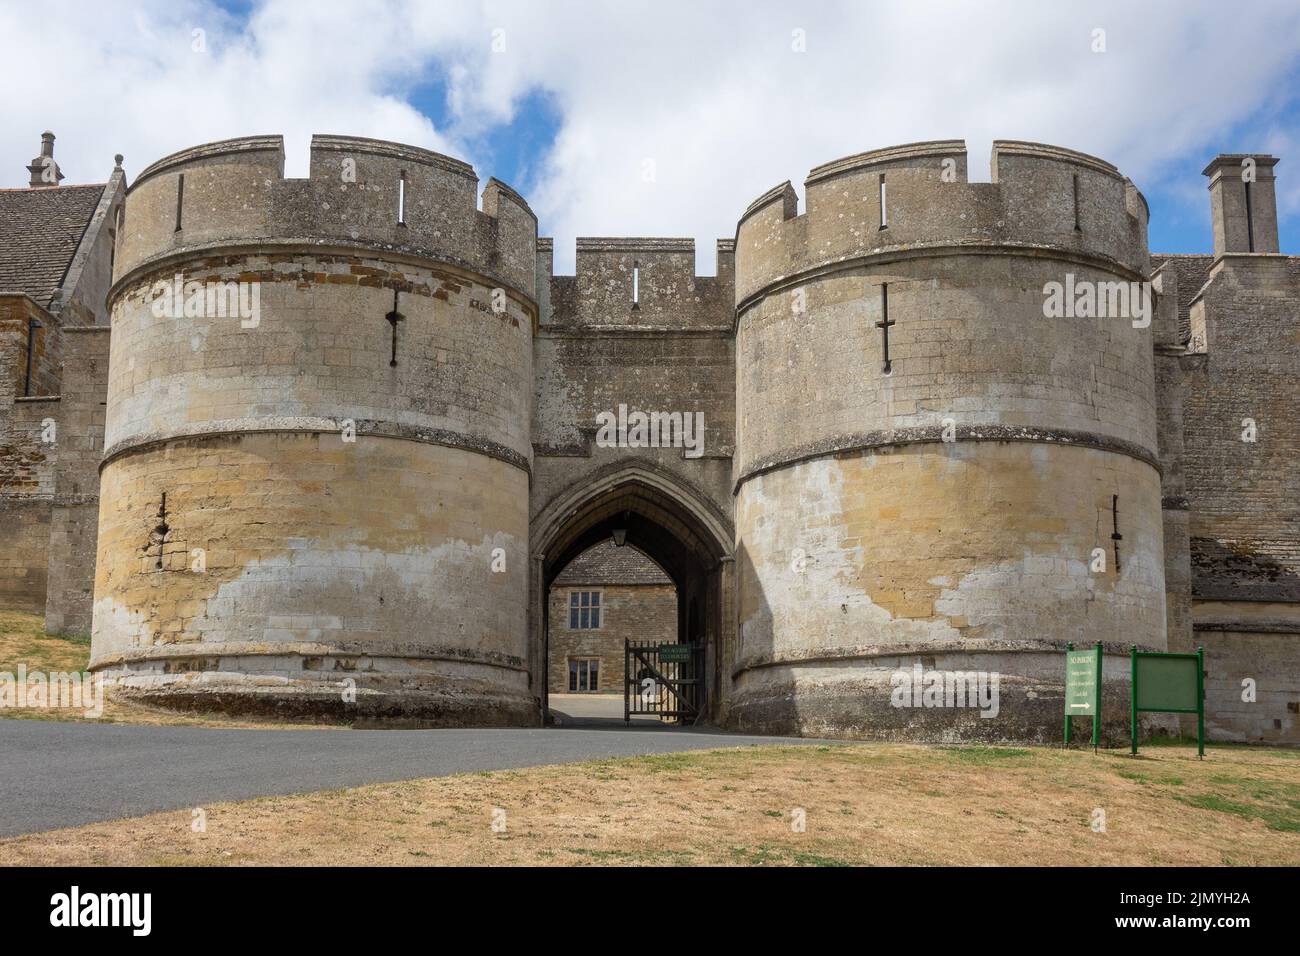 England, Northamptonshire, Rockingham castle entrance Stock Photo